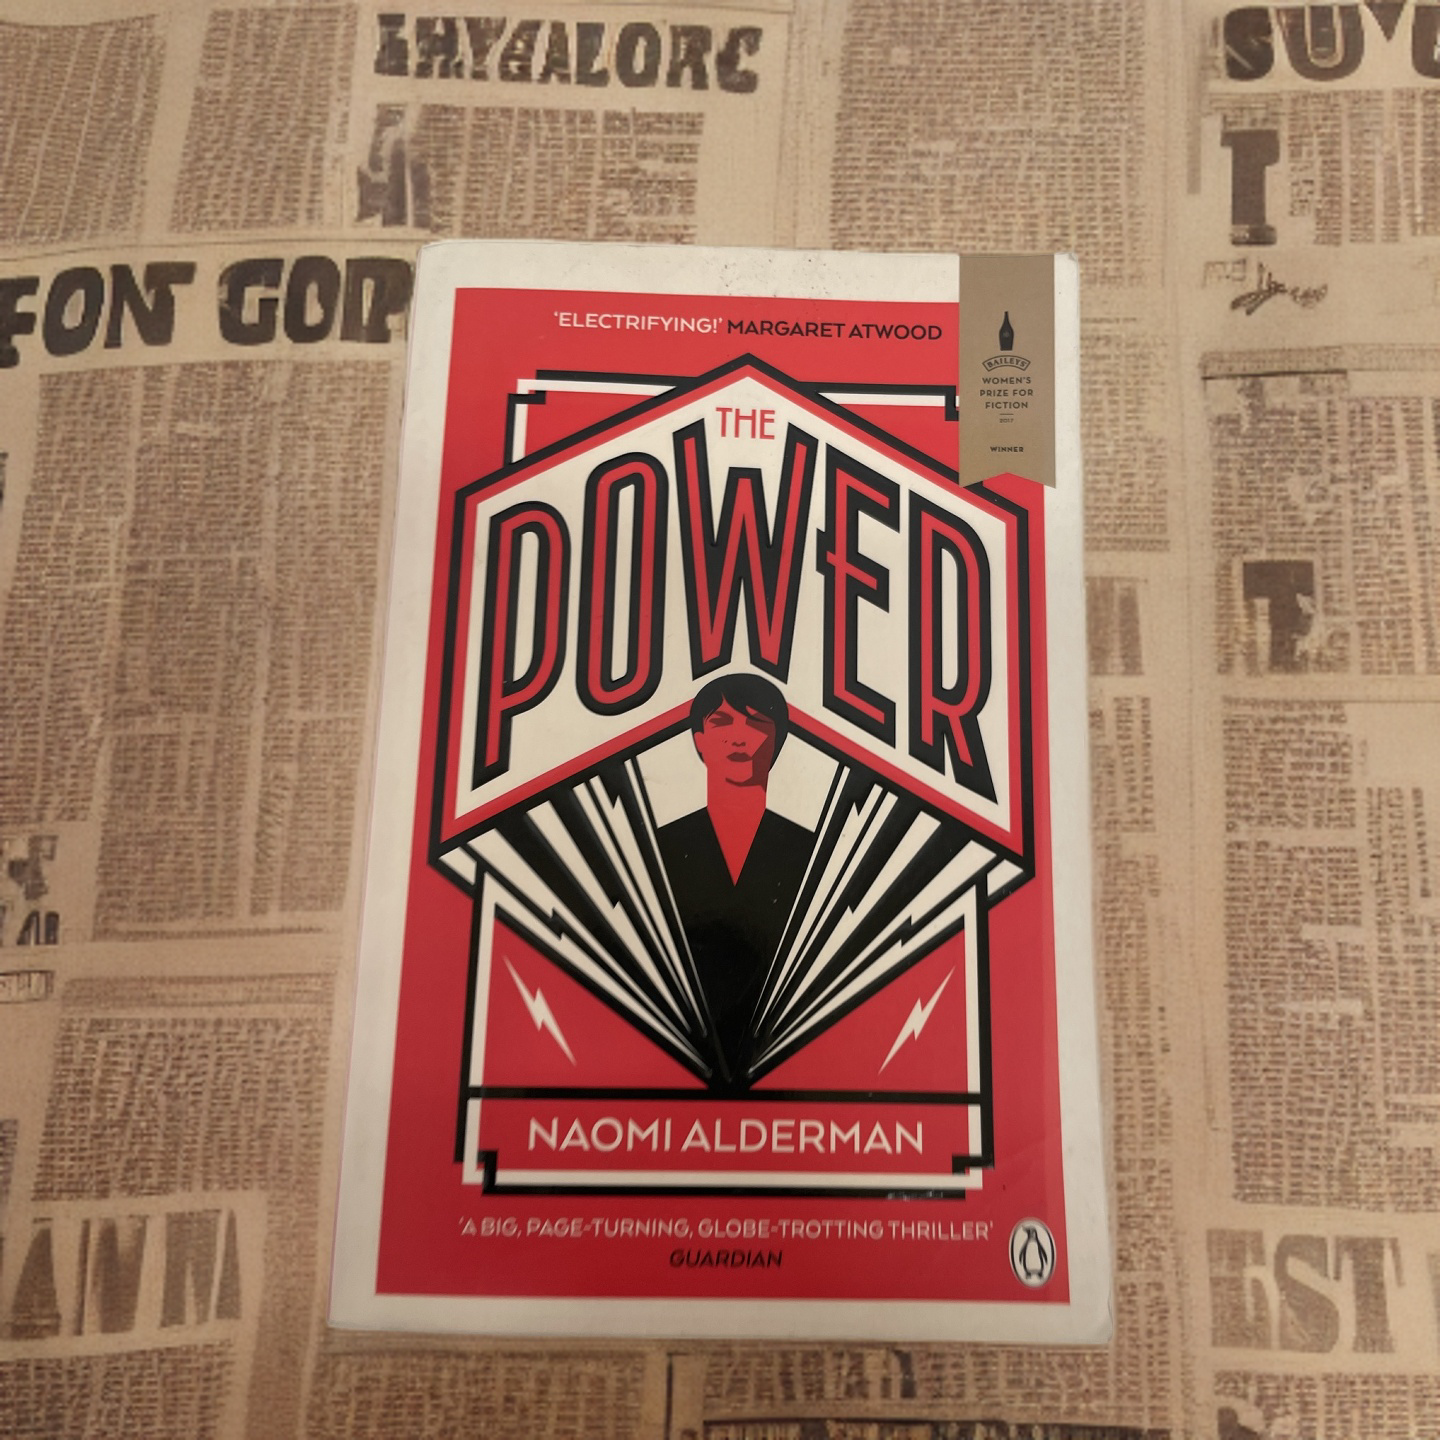 Rubynee The Power Novel by Naomi Alderman